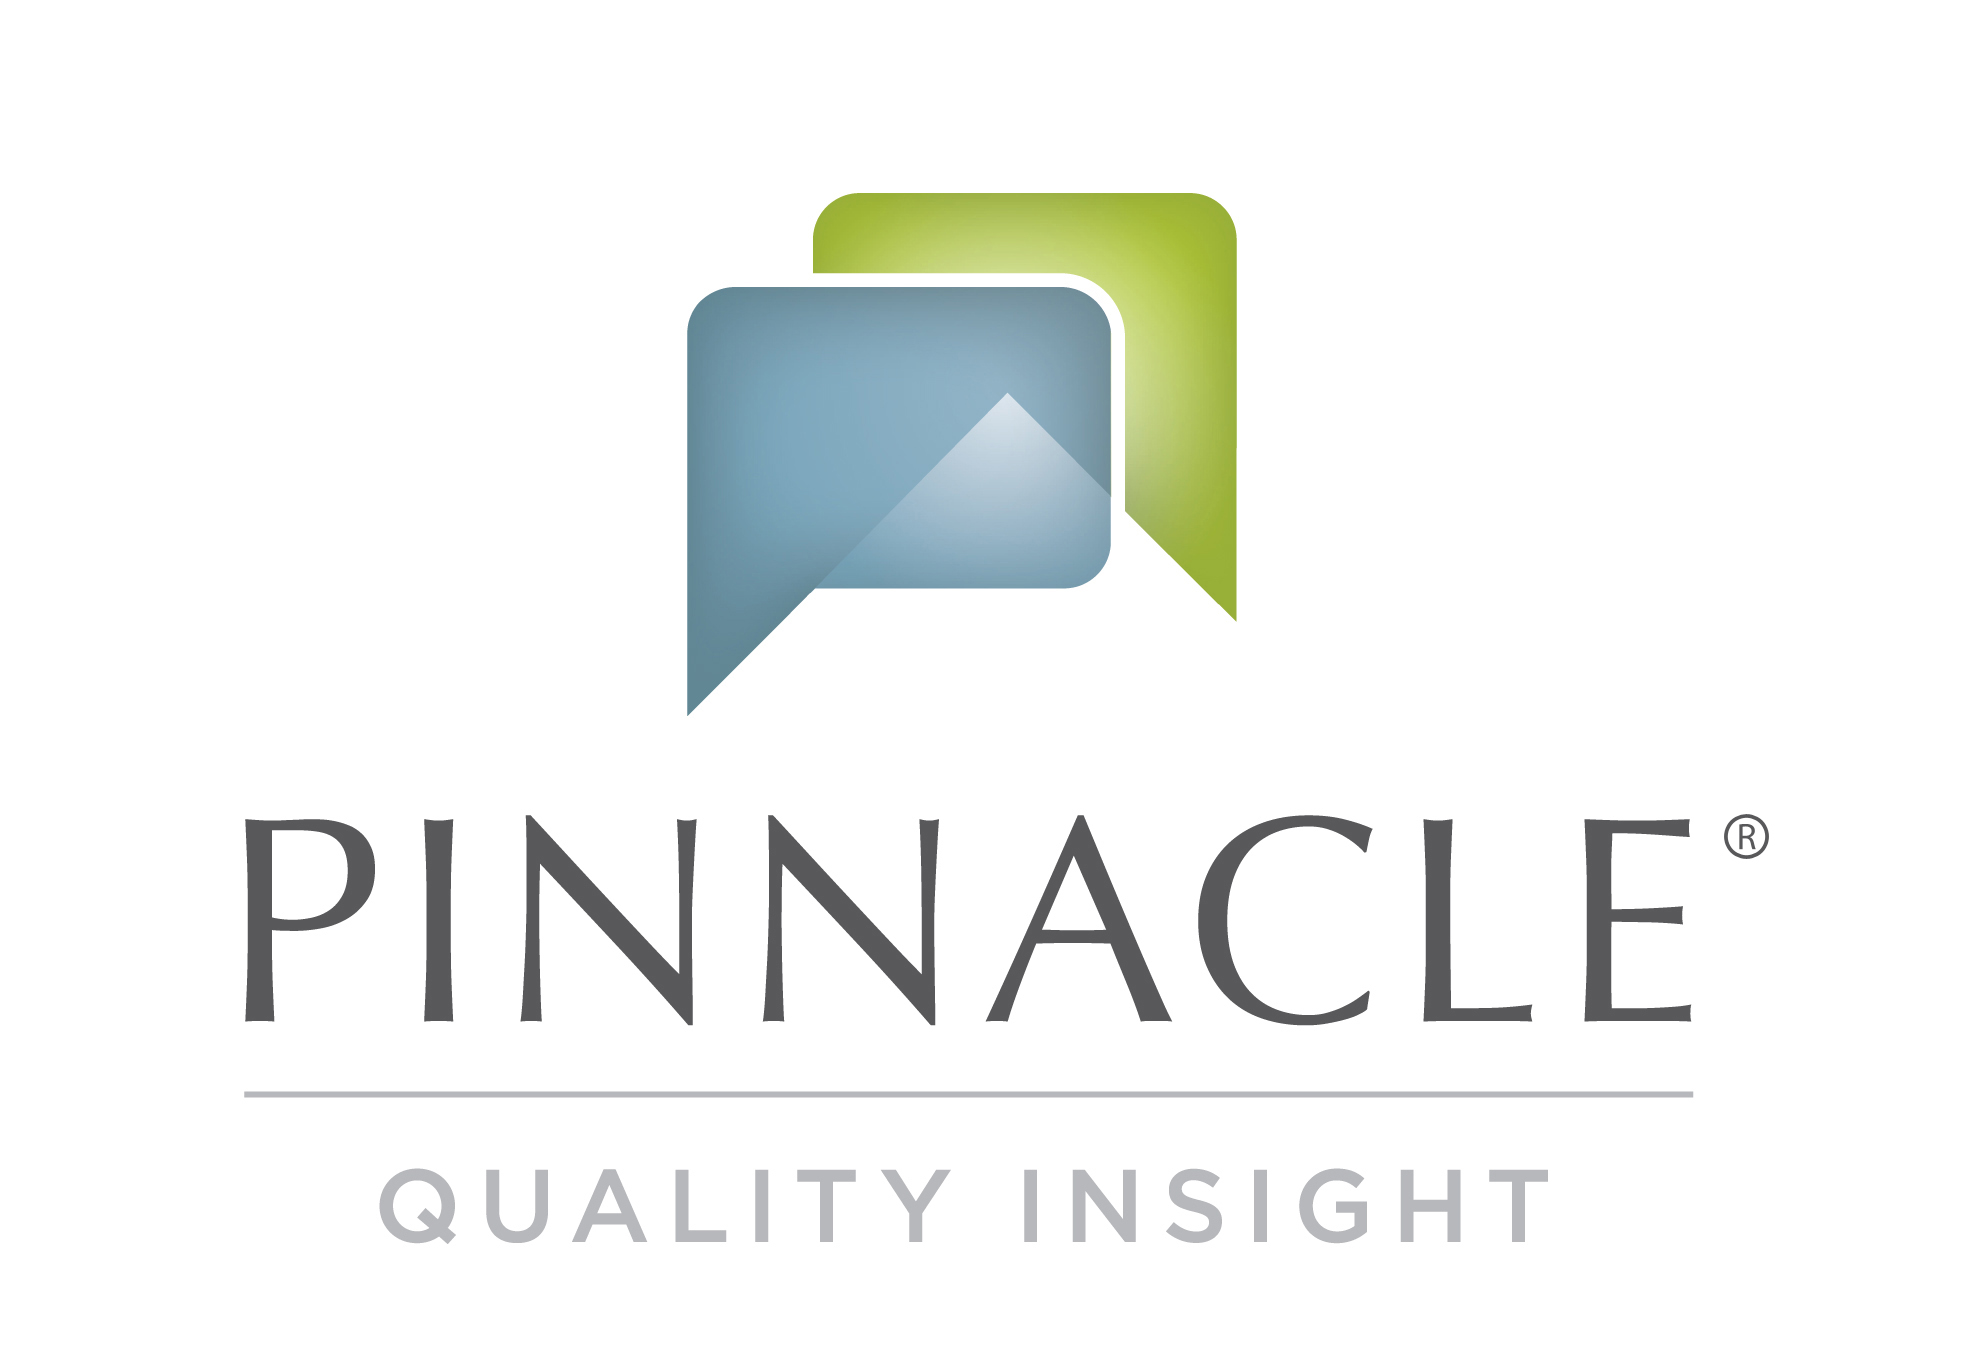 Pinnacle Quality Insight Company Logo